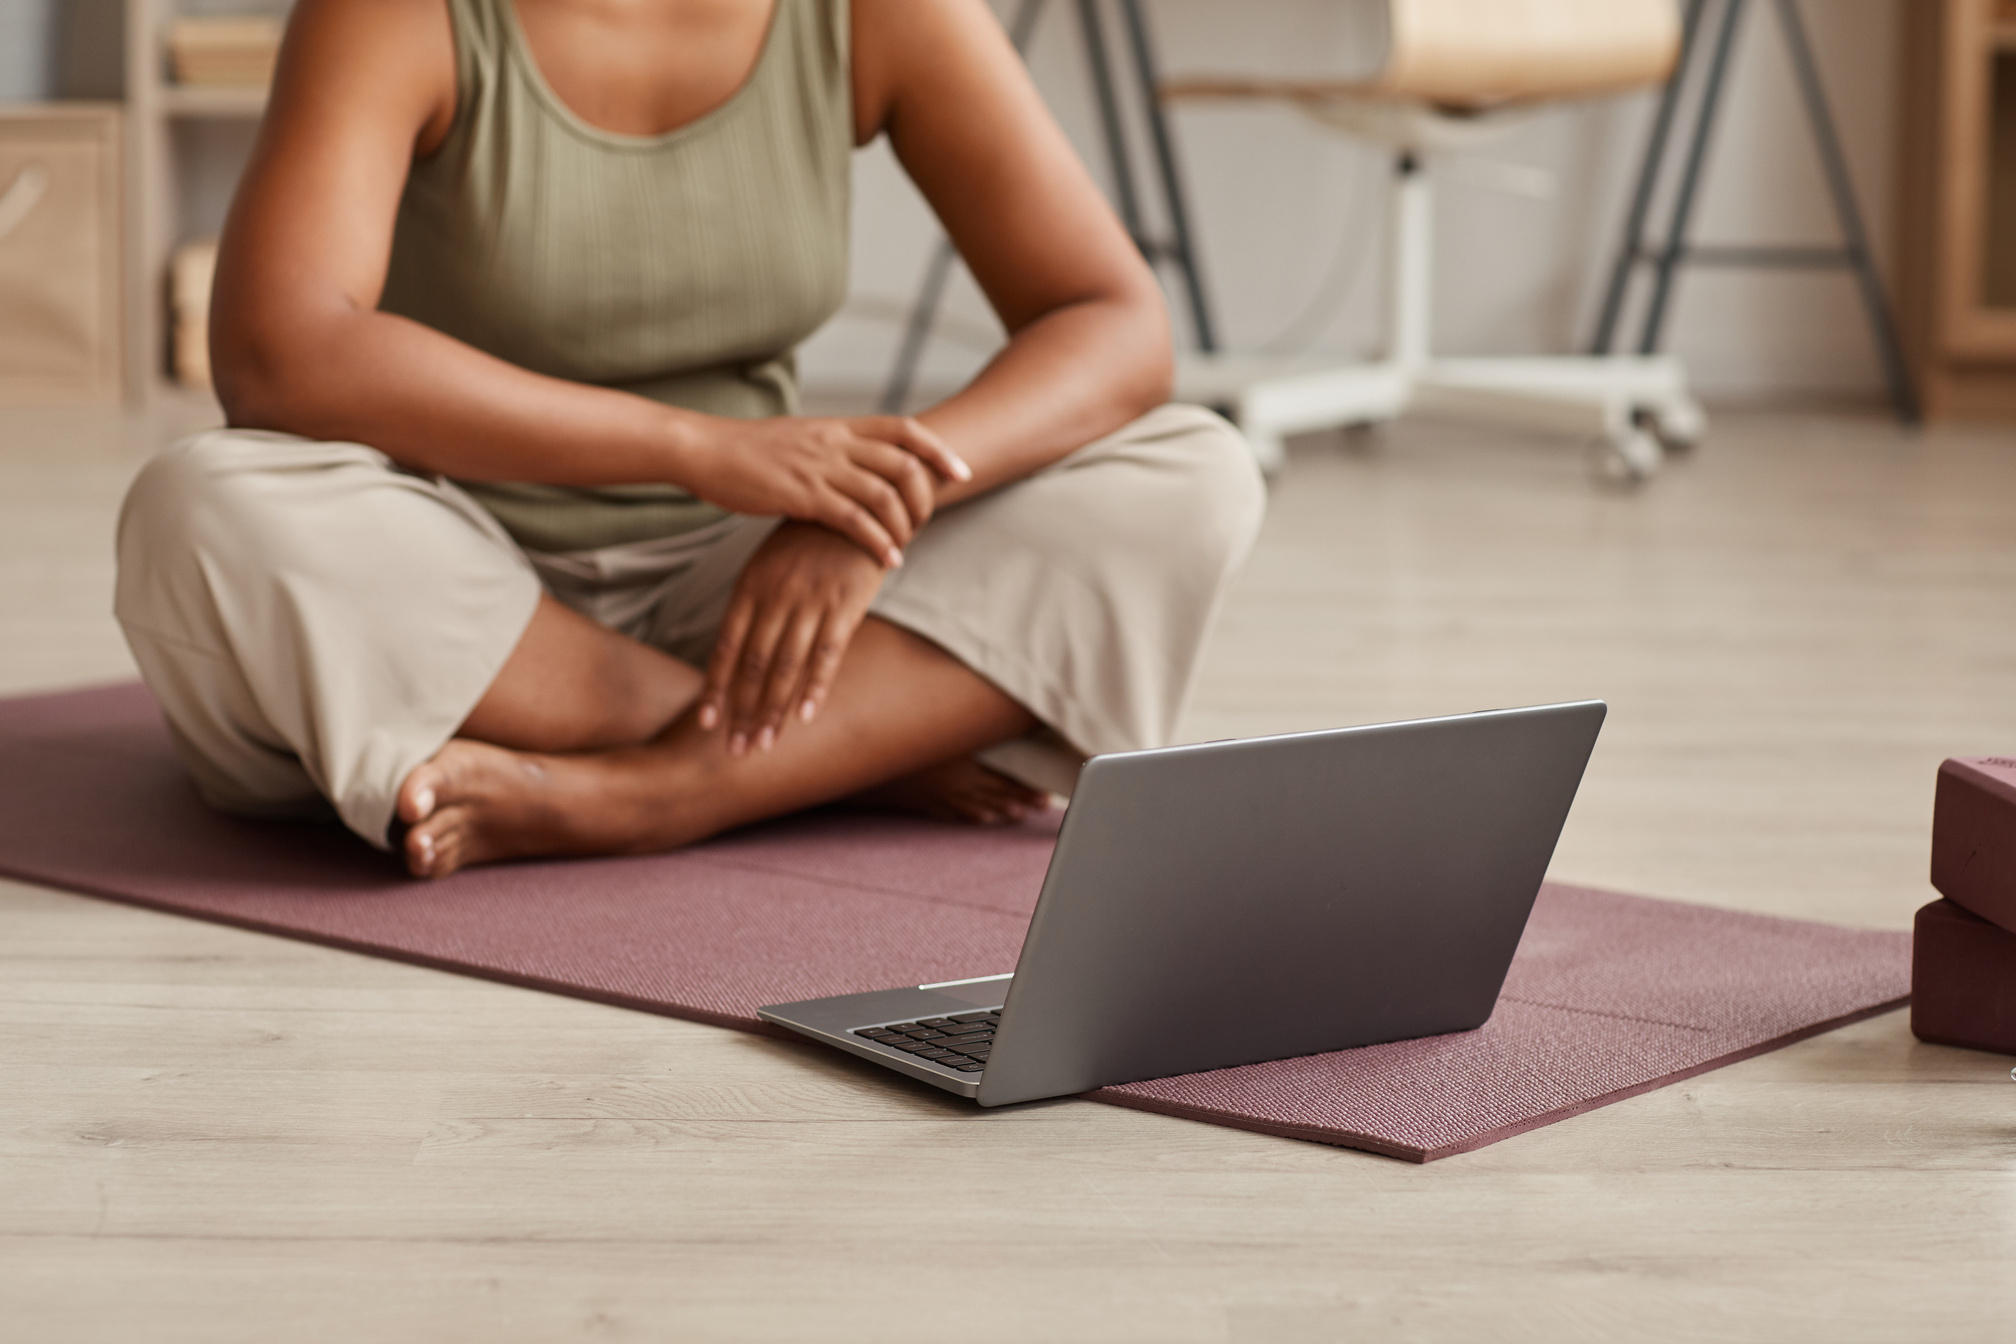 Watching yoga exercise online